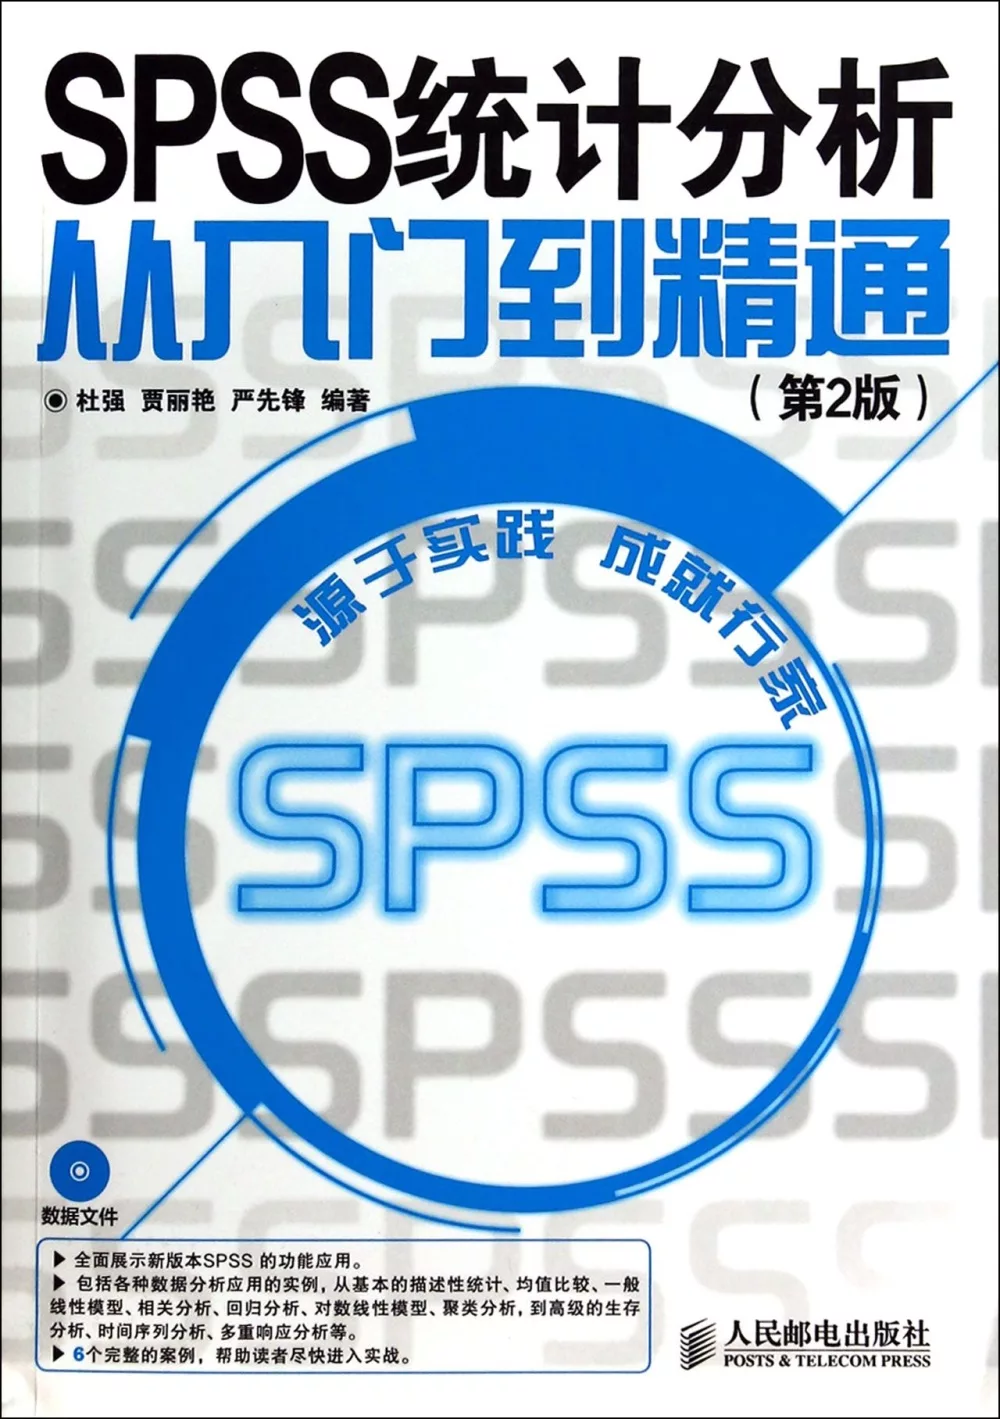 SPSS 統計分析從入門到精通(第2版)